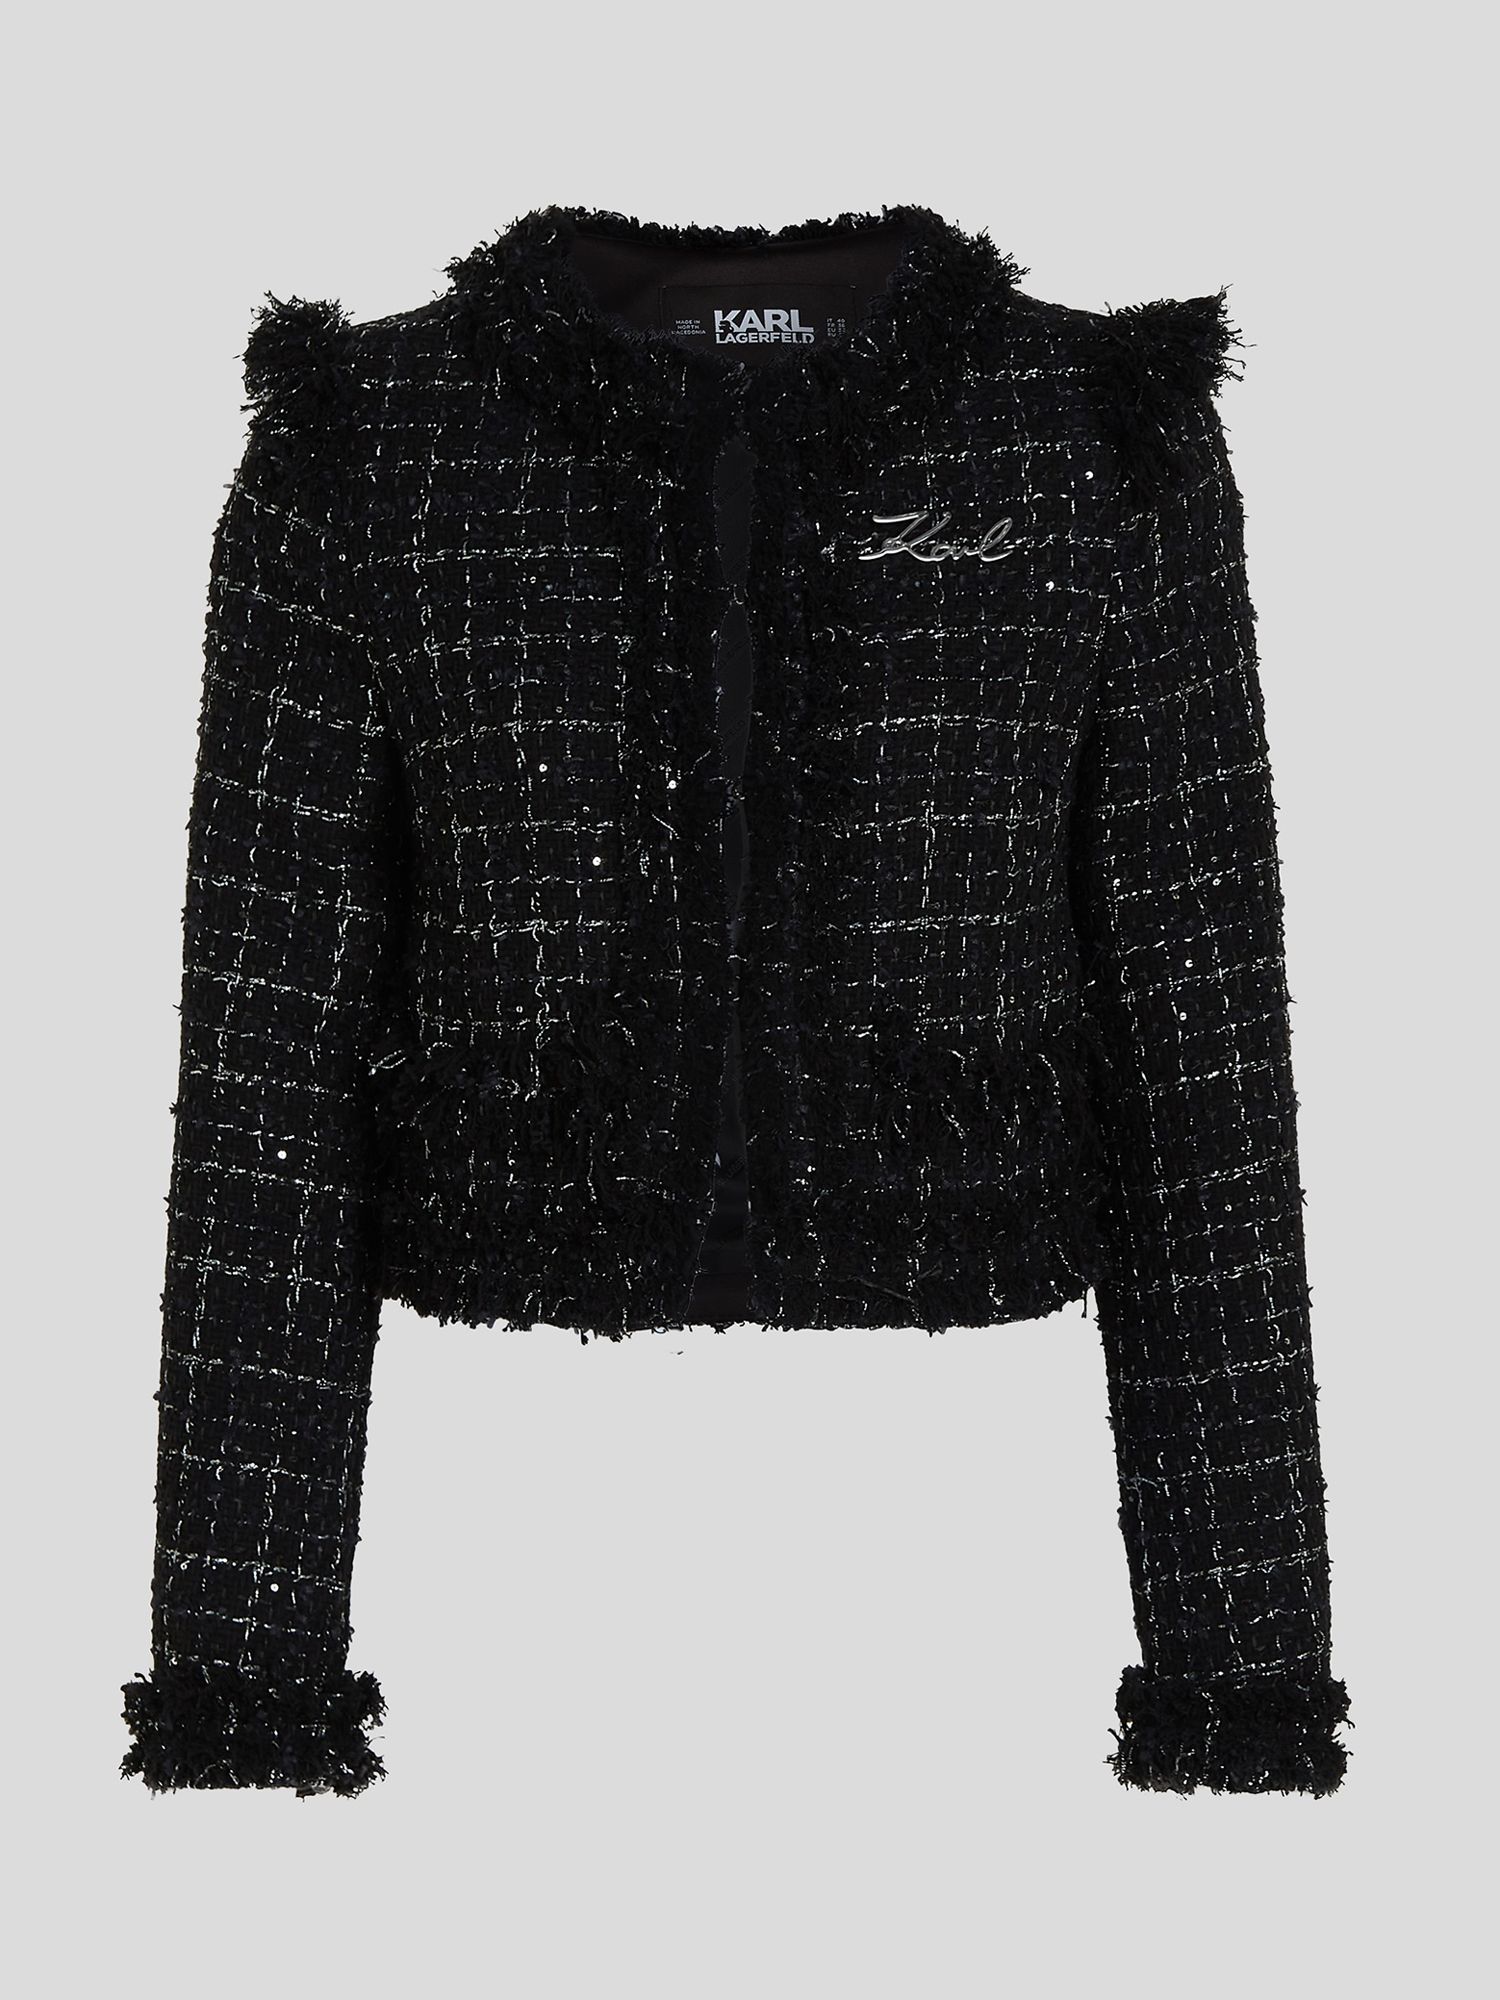 KARL LAGERFELD Check Boucle Jacket, Black/Silver at John Lewis & Partners